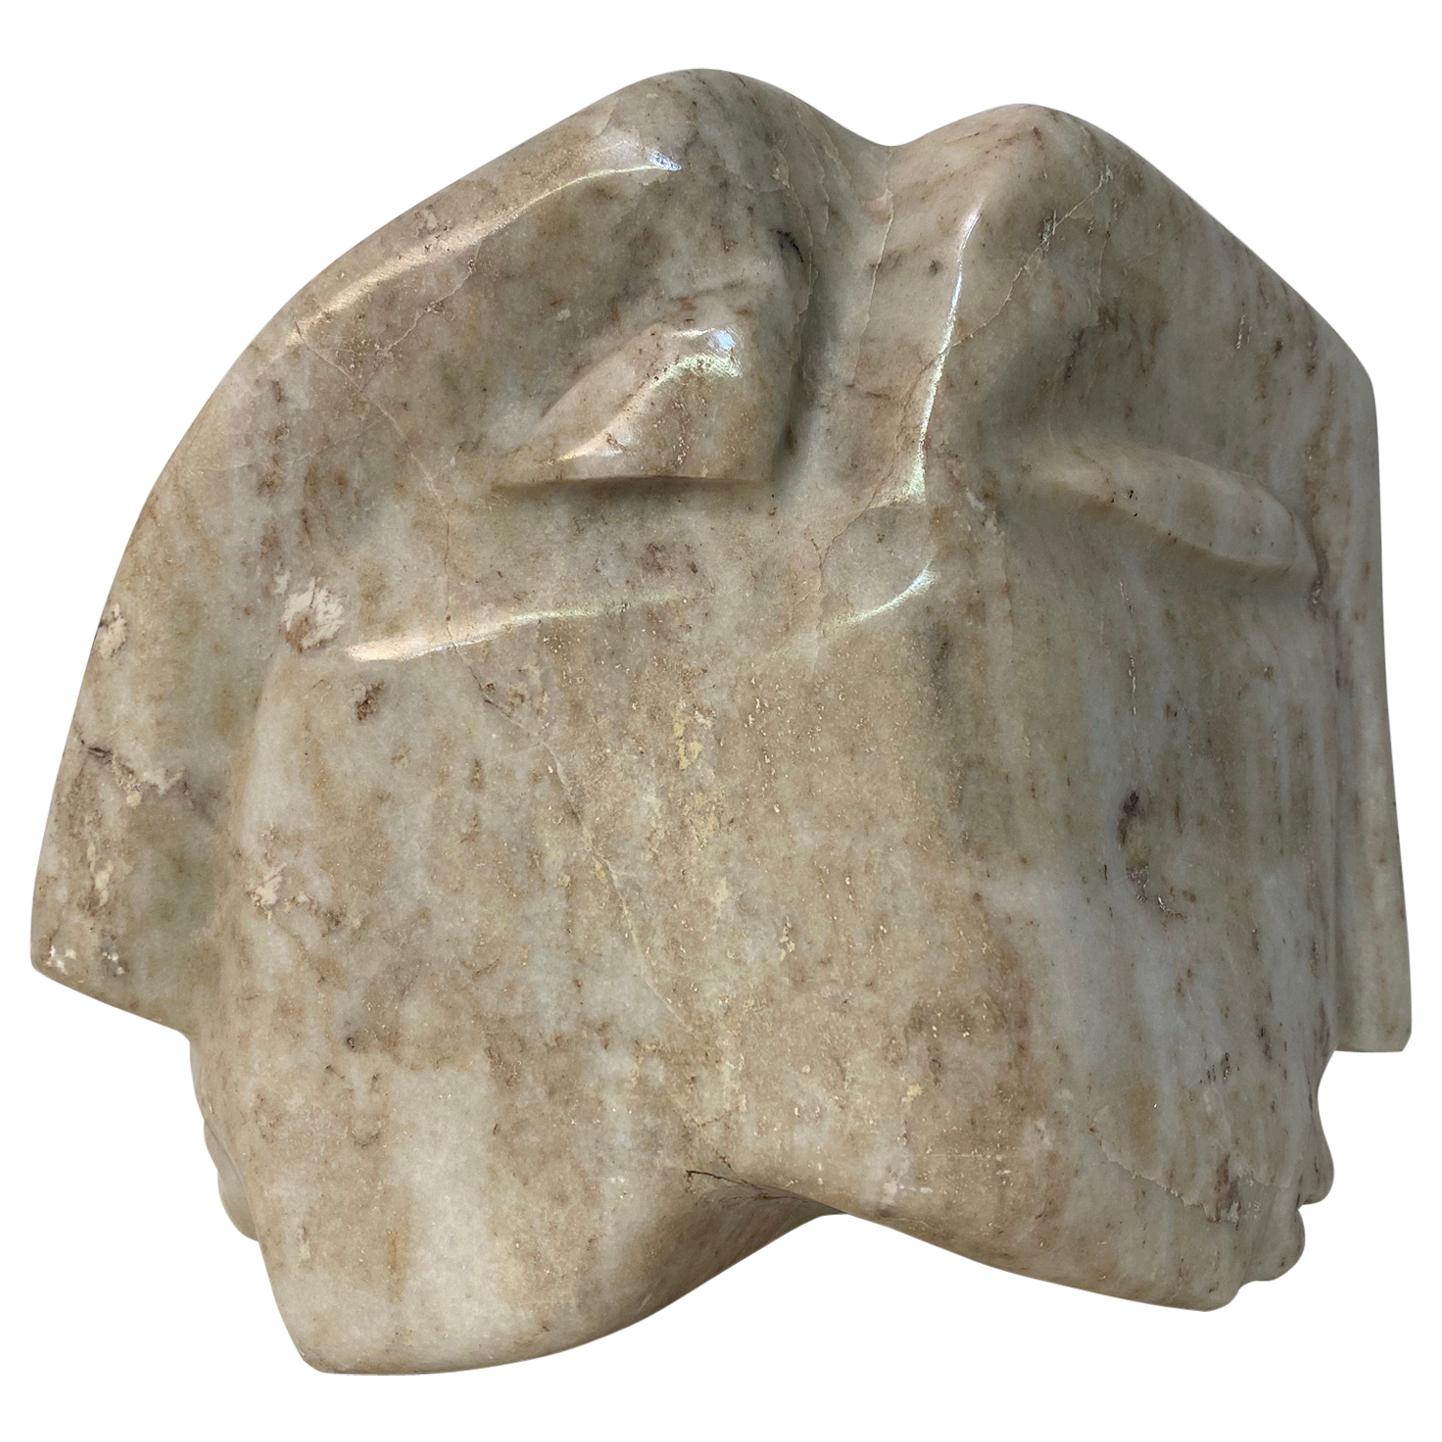 1973 Double Head Marble Sculpture